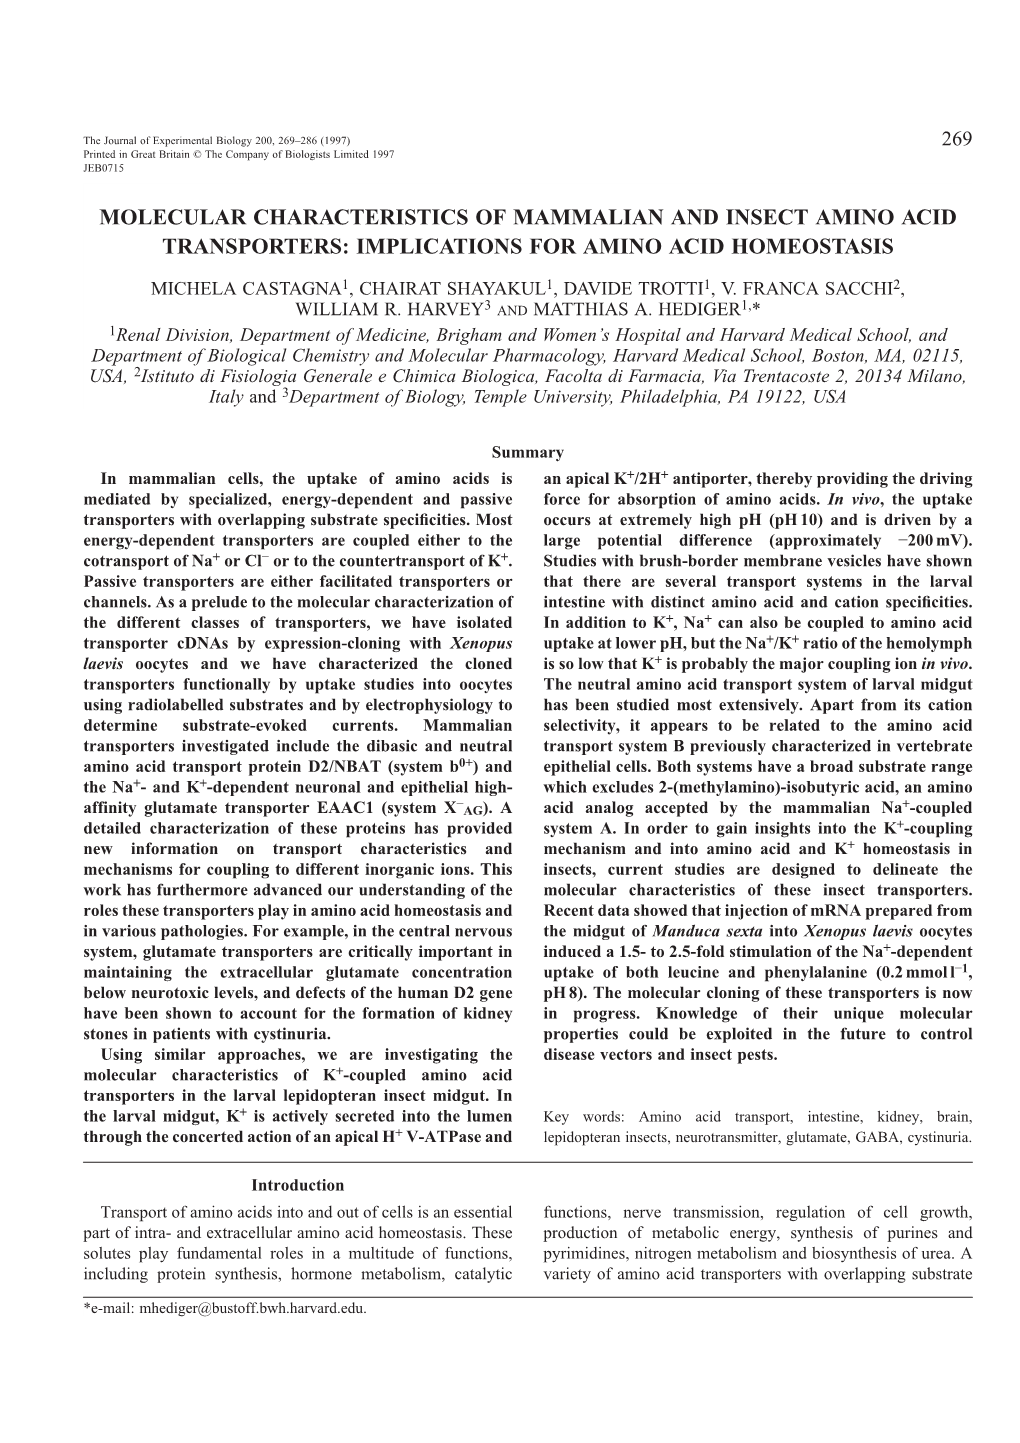 Molecular Characteristics of Mammalian and Insect Amino Acid Transporters: Implications for Amino Acid Homeostasis